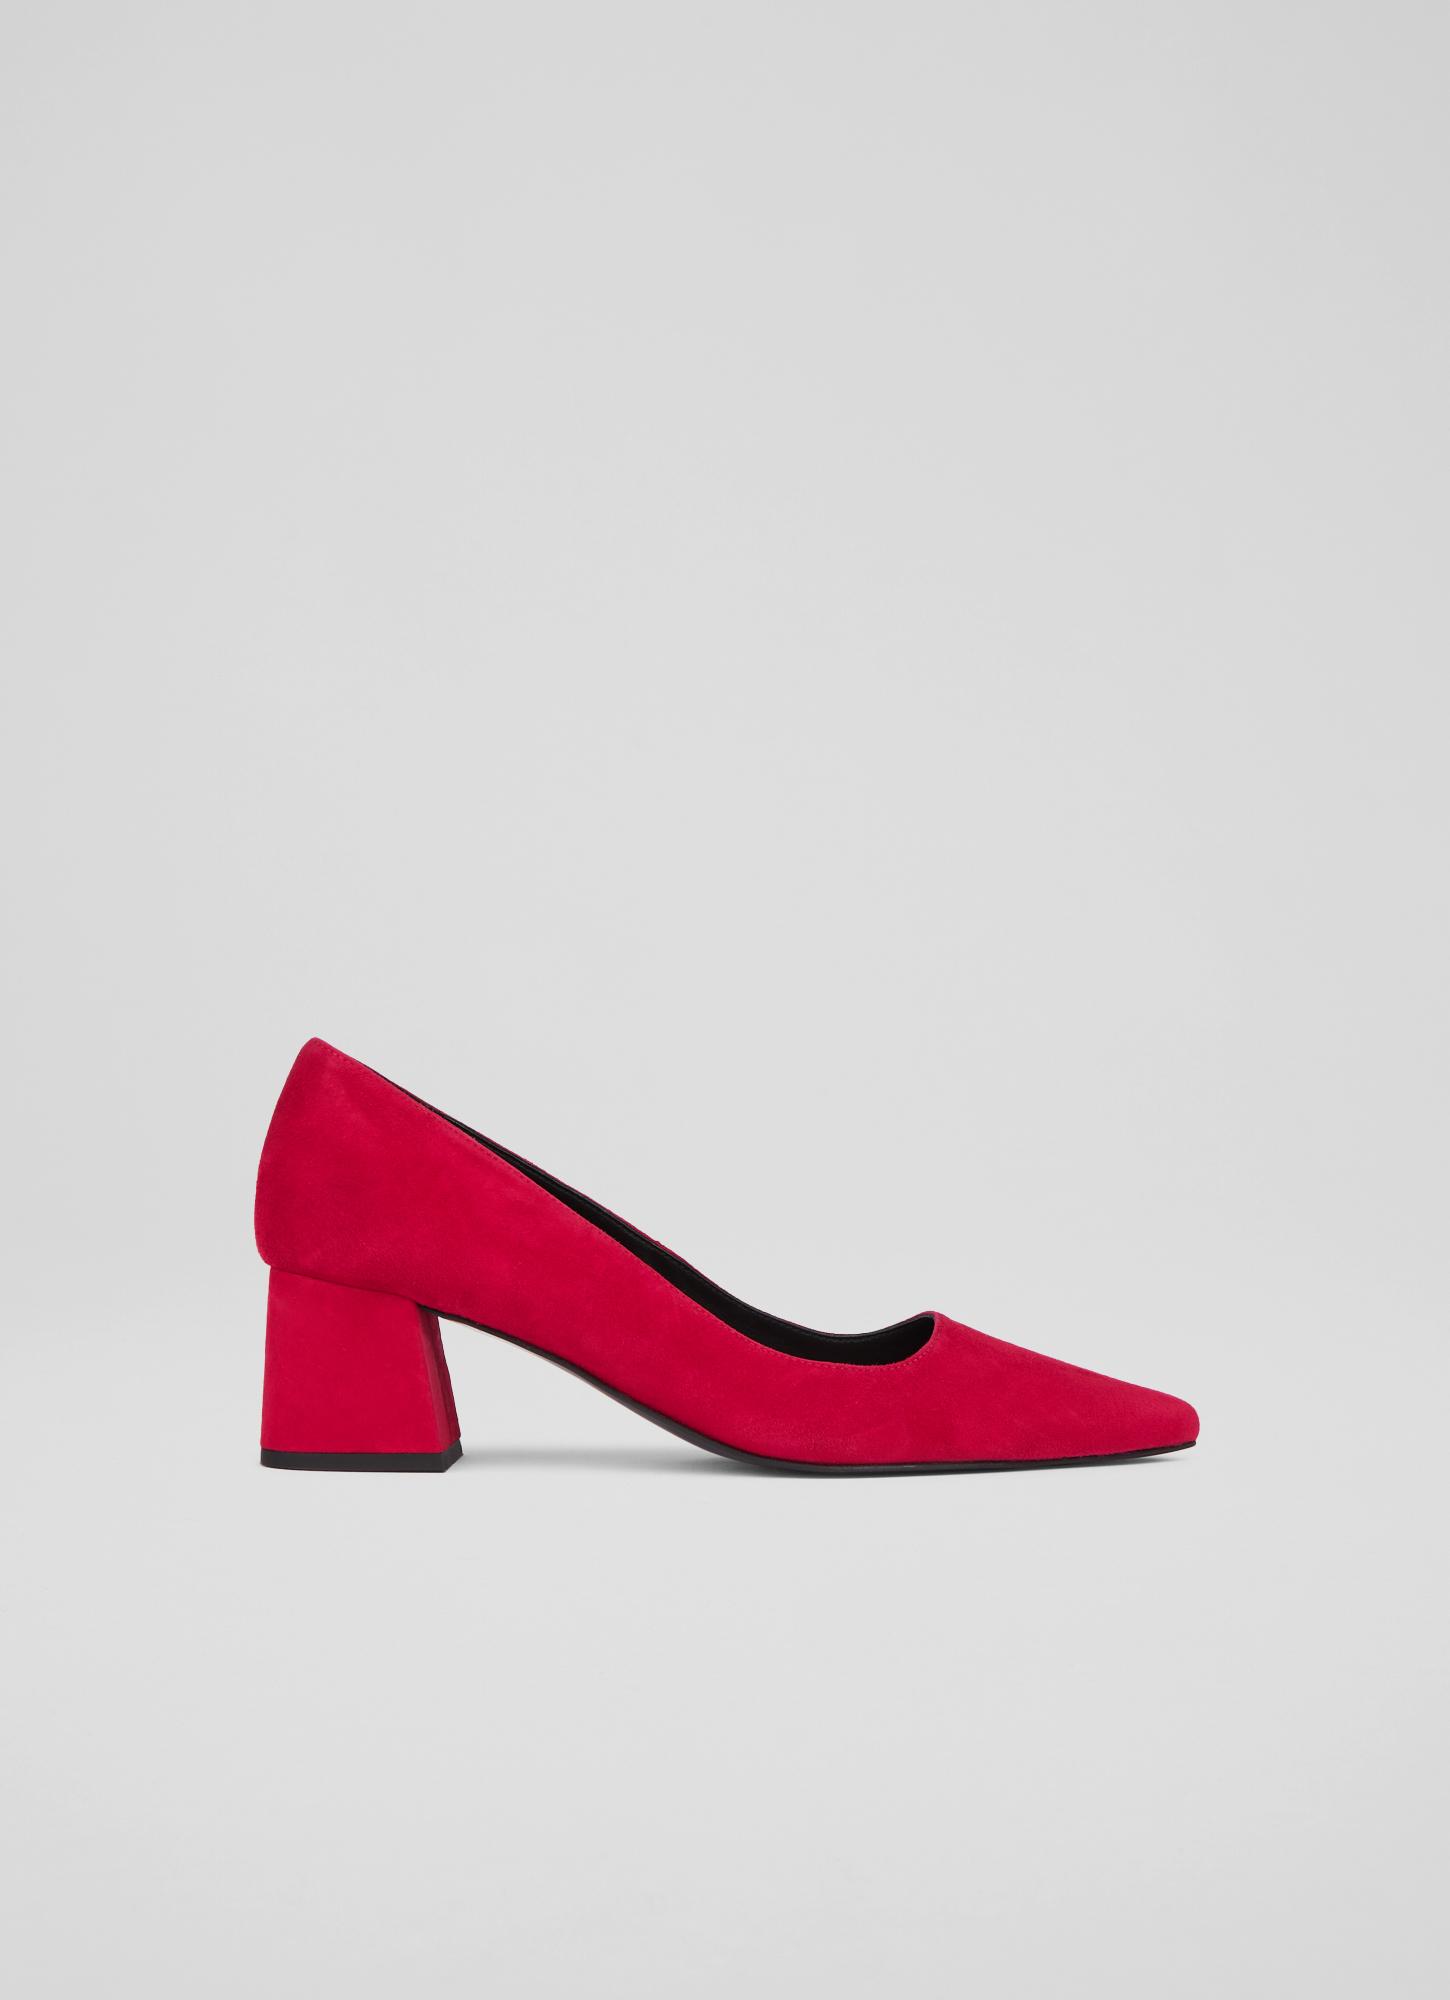 Zara | Shoes | Zara Glitter High Heel Shoes | Poshmark